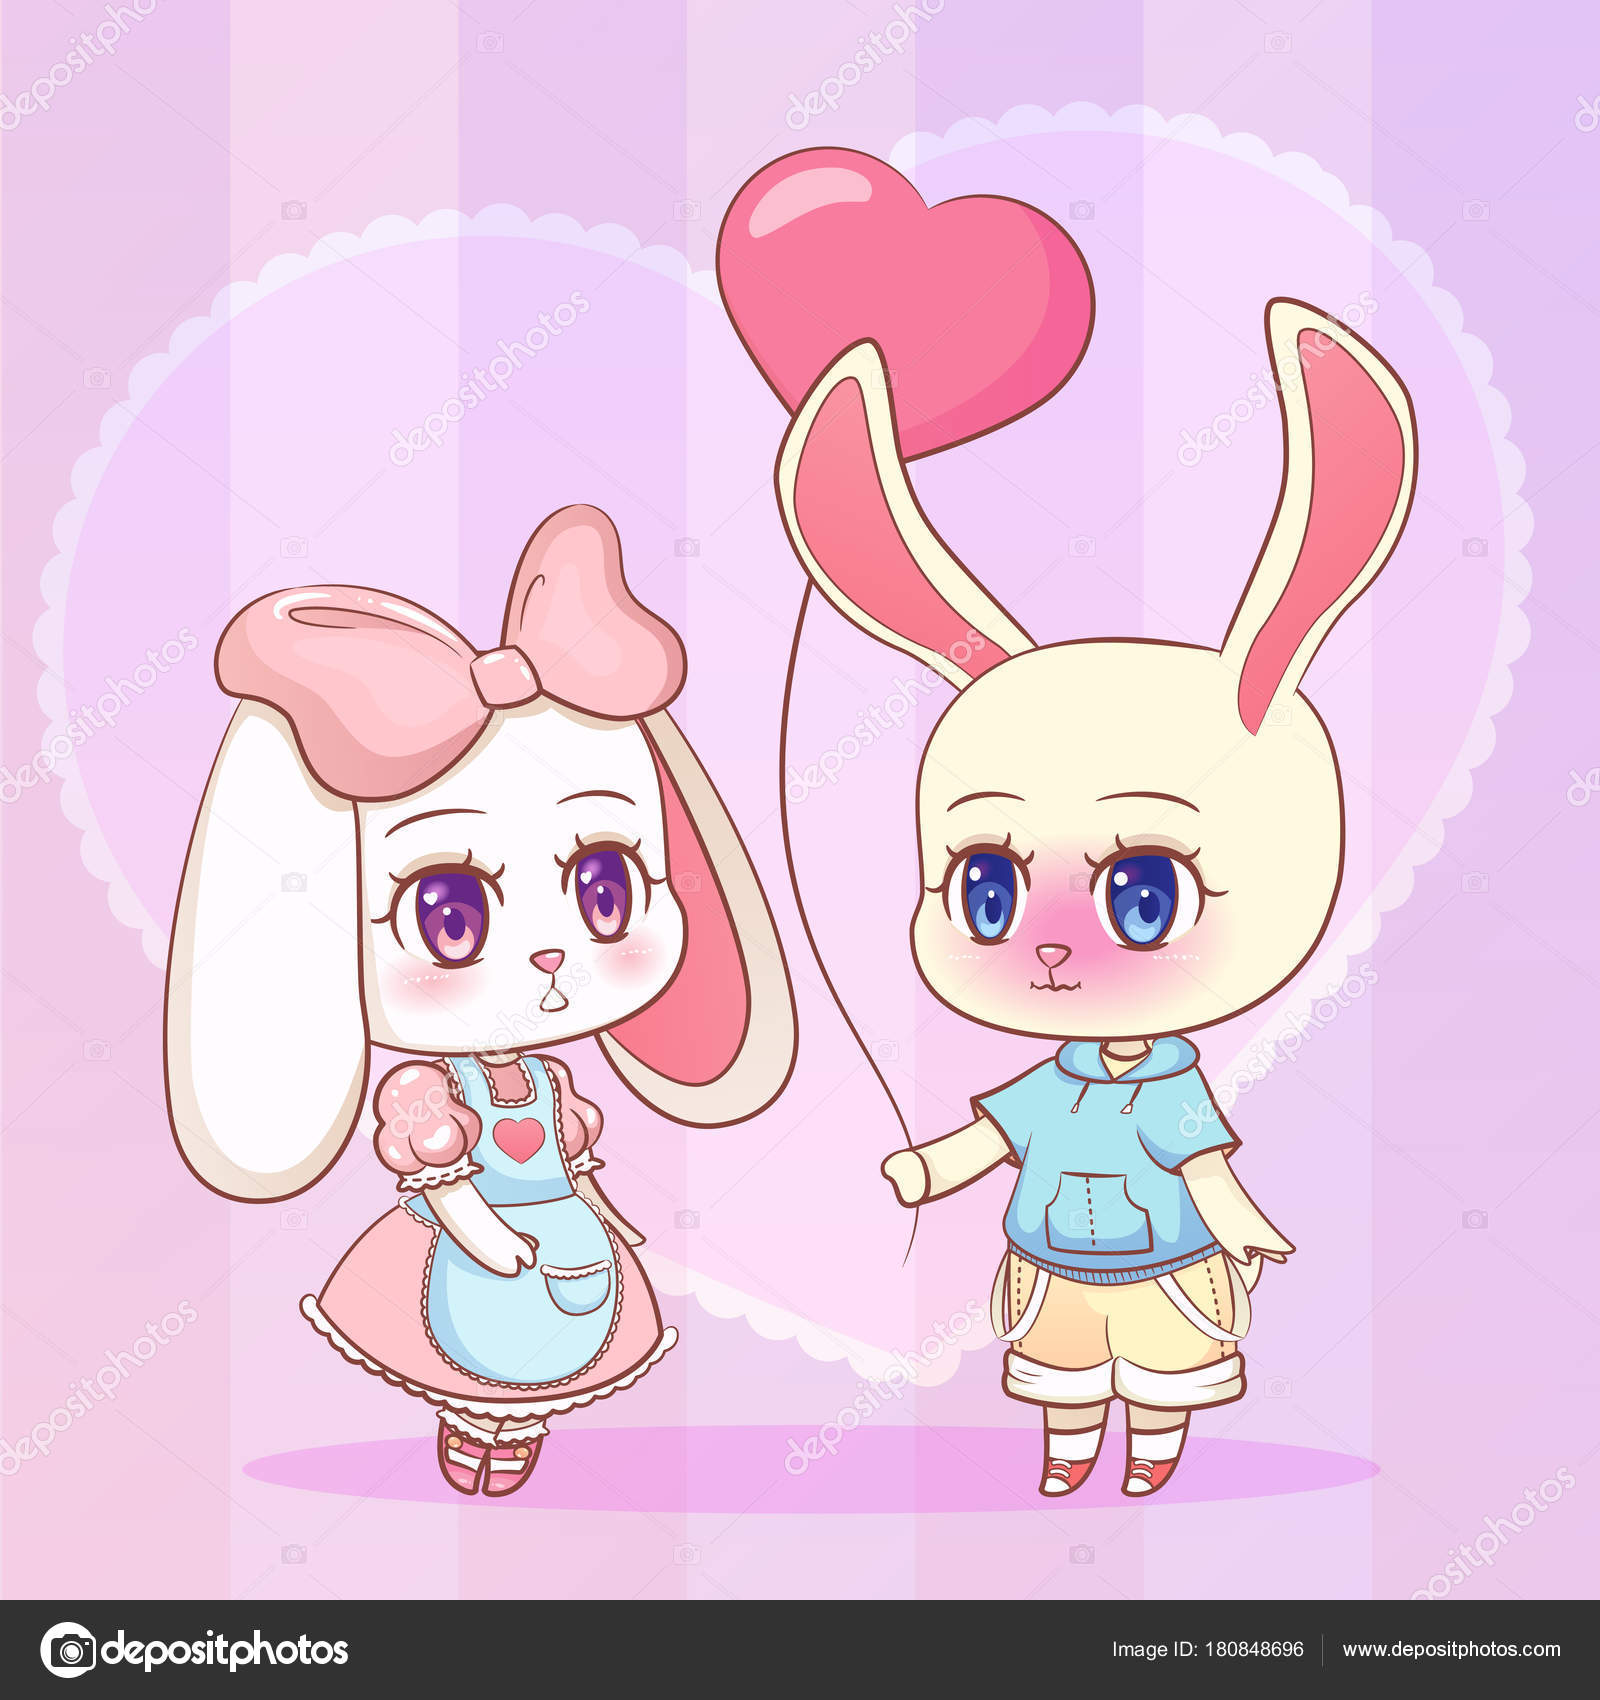 Cute Anime Bunny Wallpaper Sweet Little Cute Kawaii Anime